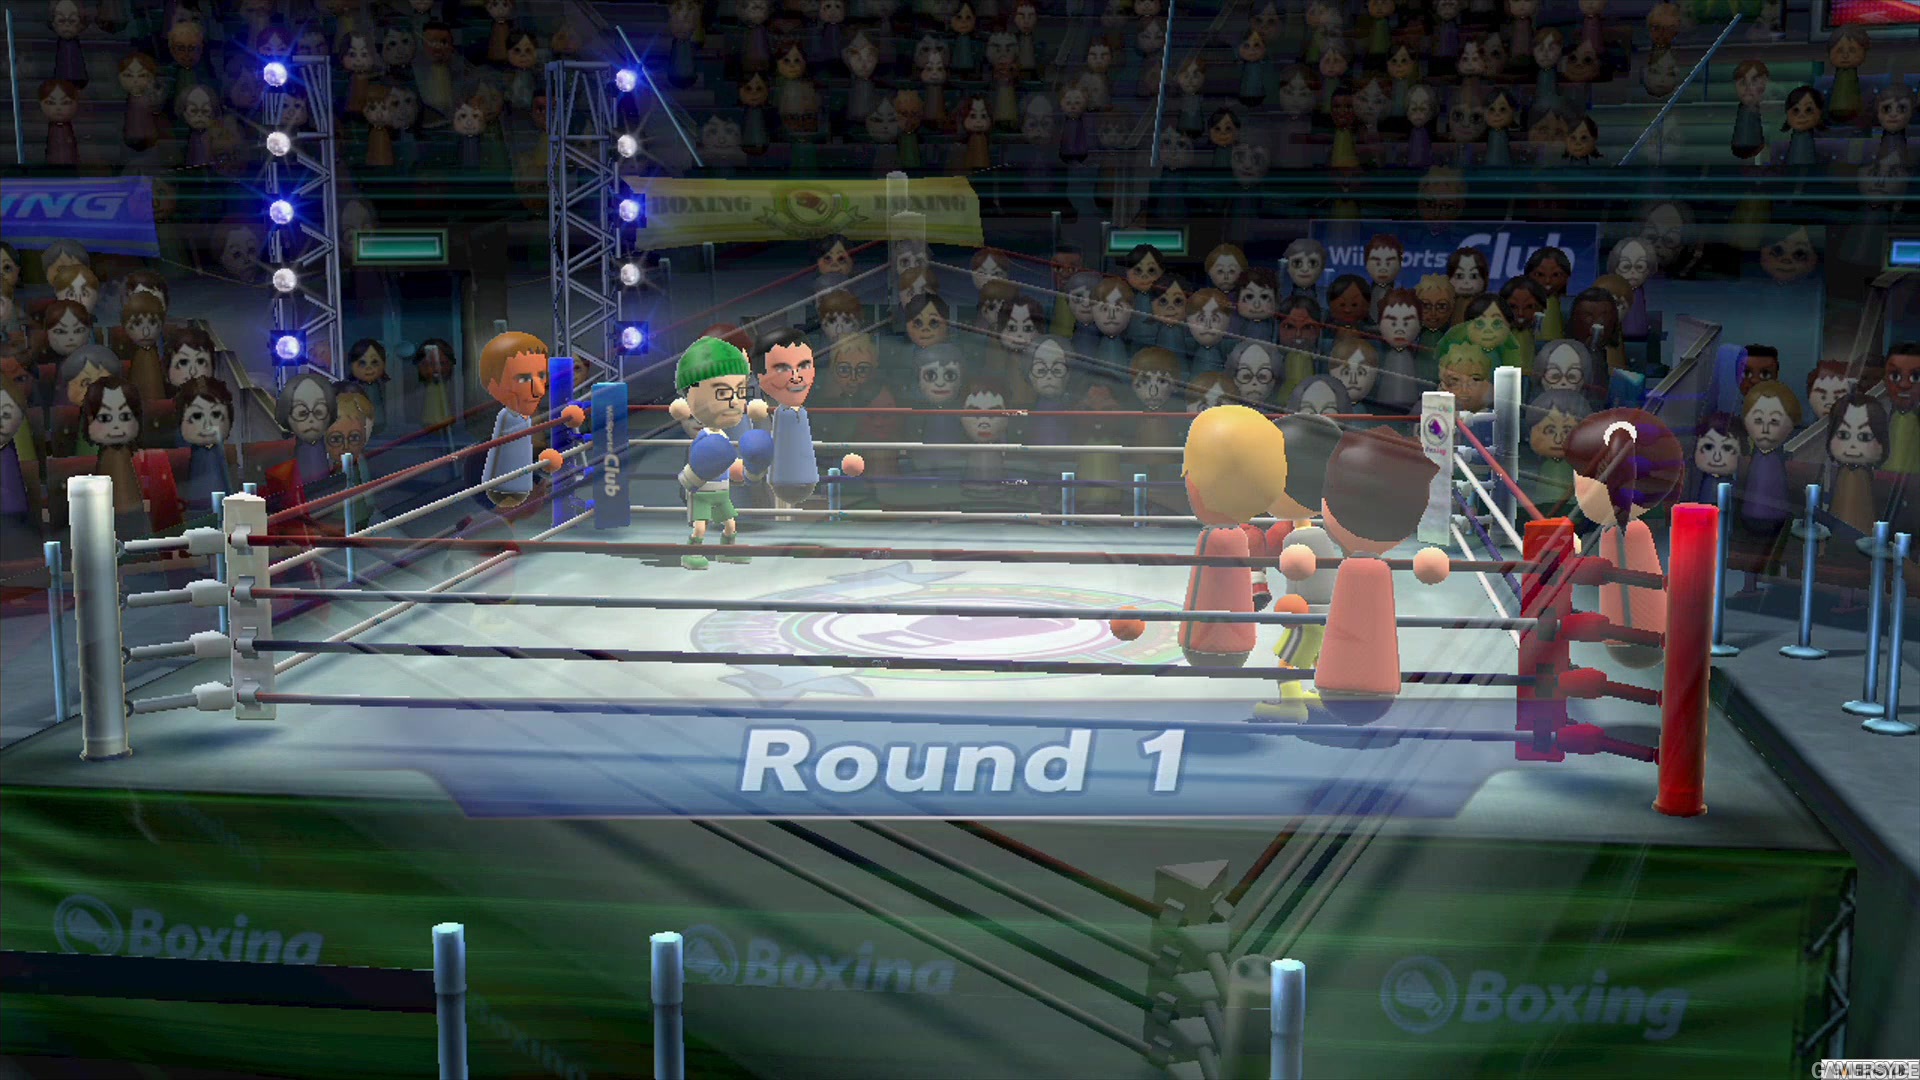 borde Impuro Ballena barba Wii Sports Club - Boxing - High quality stream and download - Gamersyde